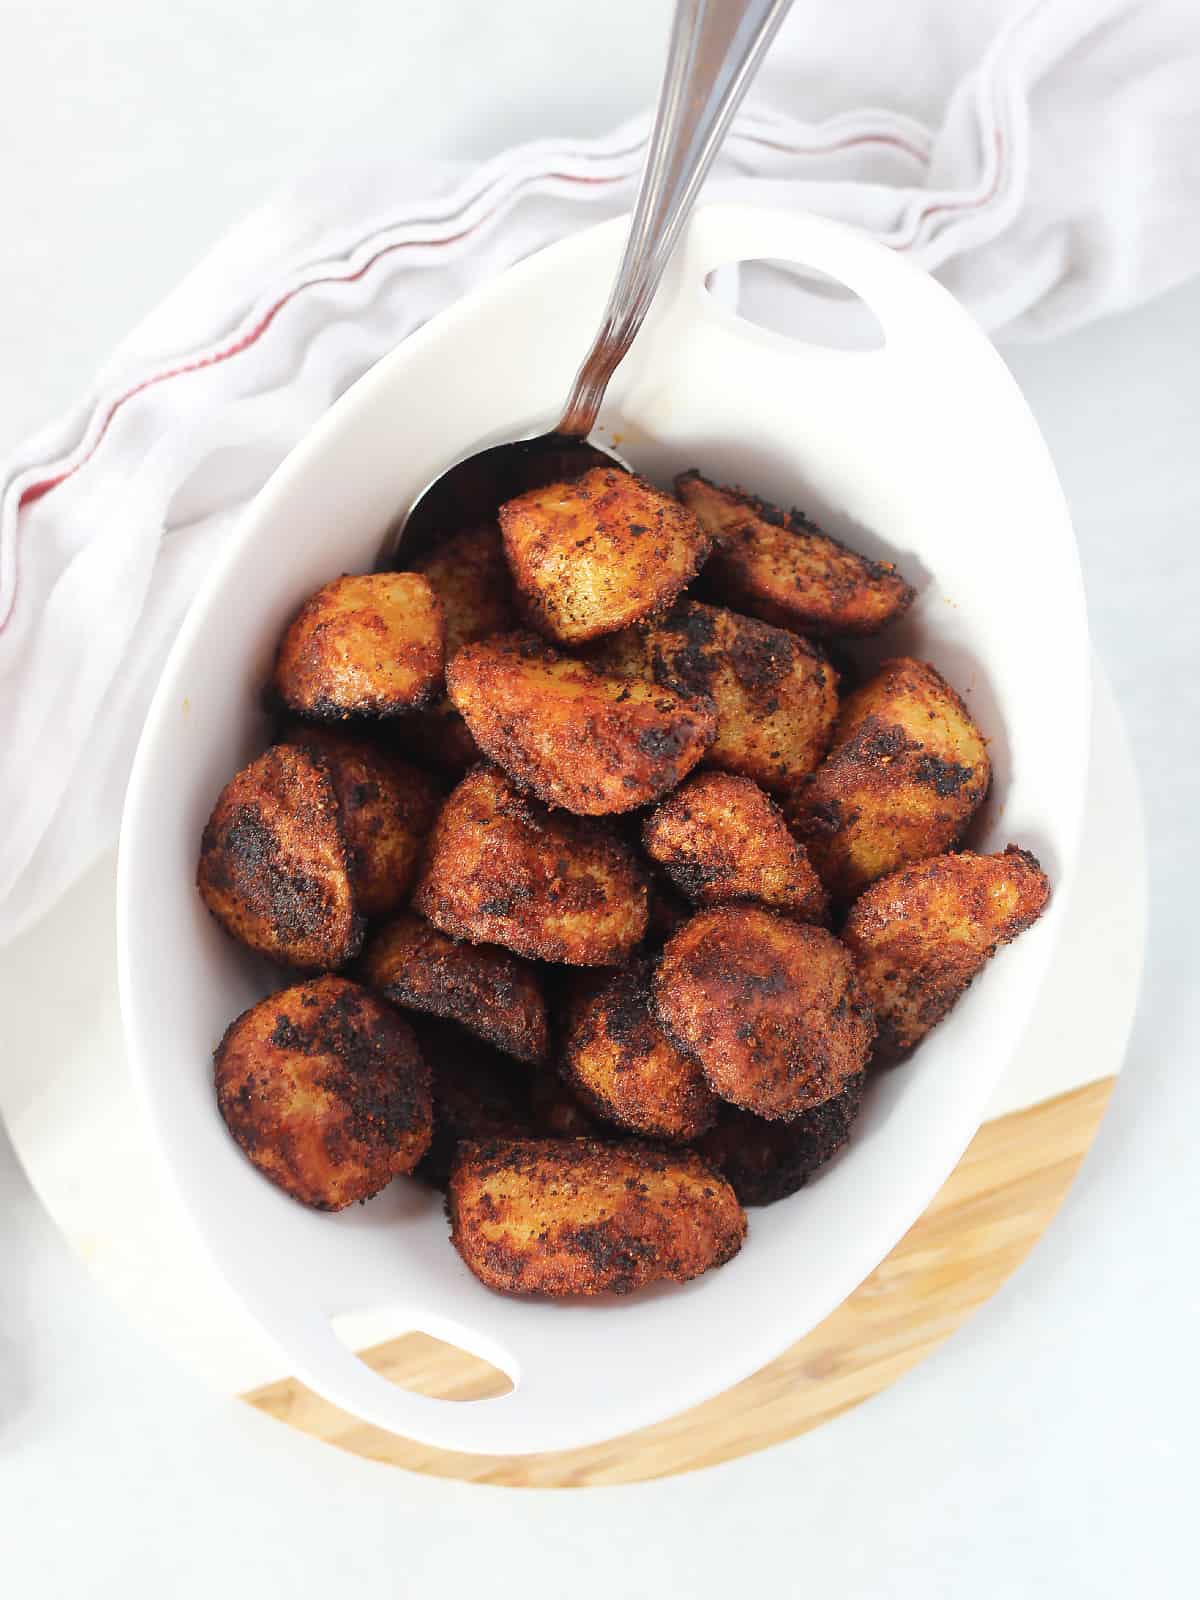 Roasted potatoes seasoned with paprika and cayenne.